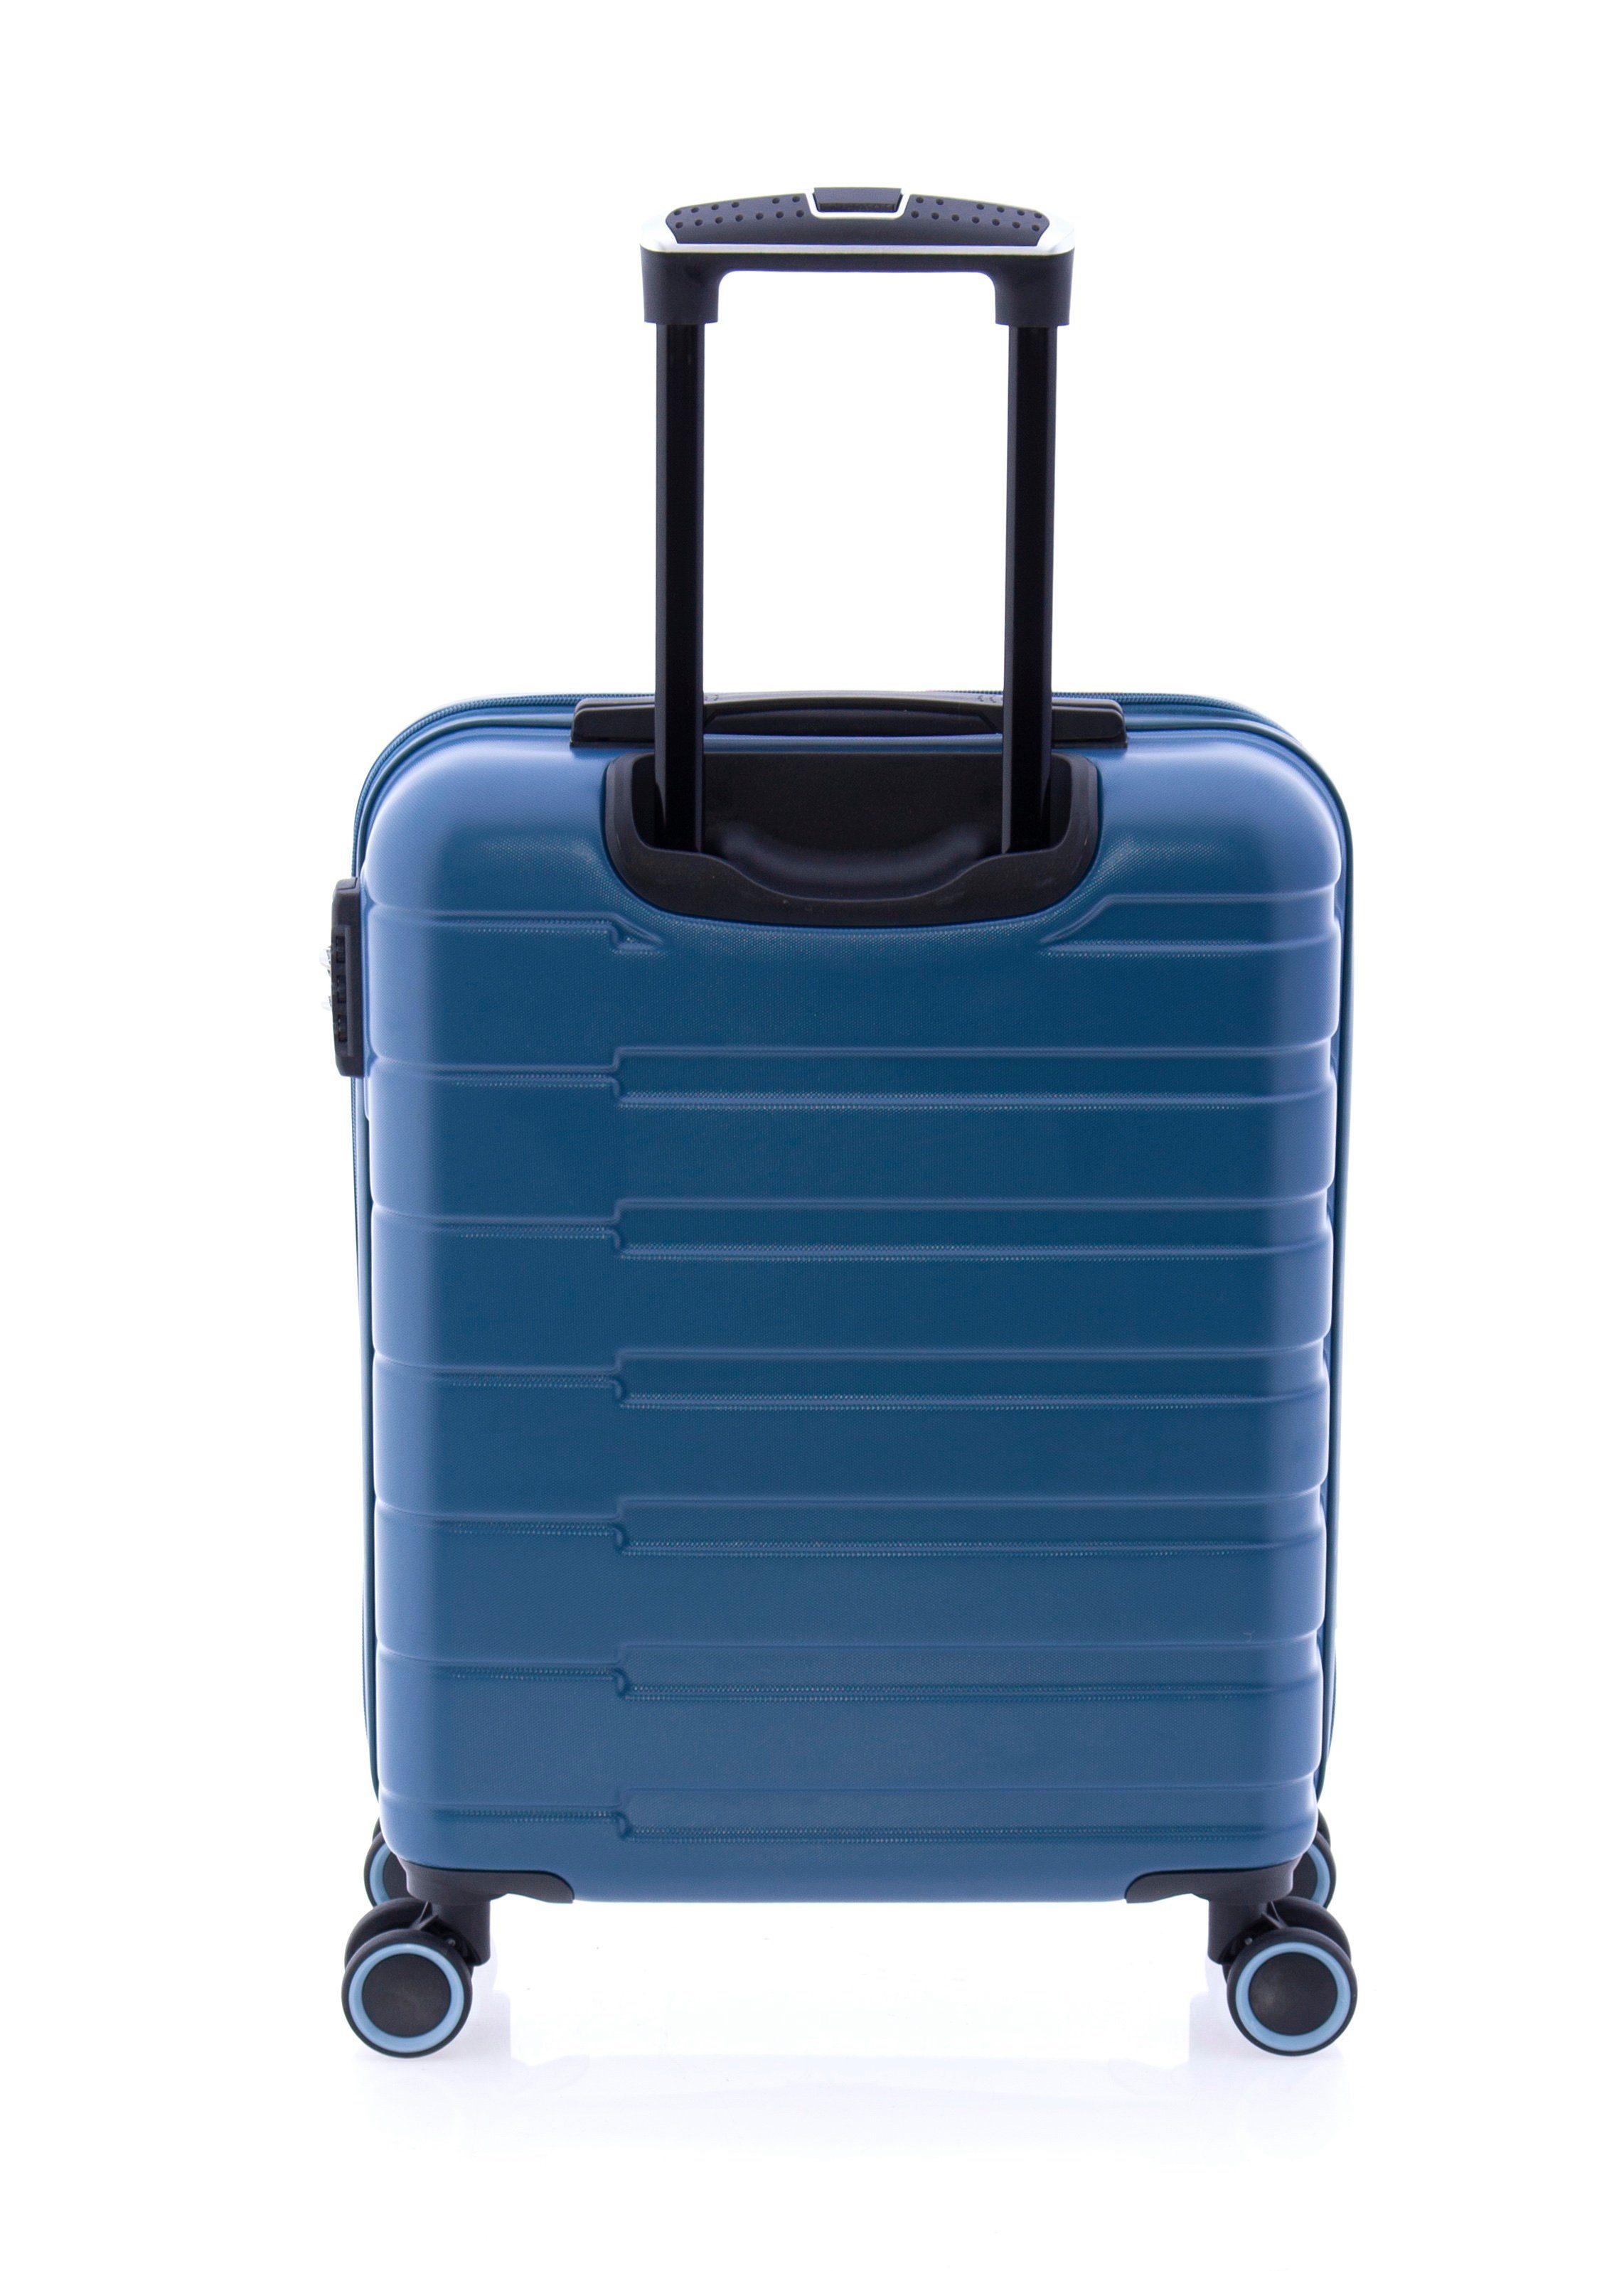 Rollen 4 - GLADIATOR 55cm - Handgepäck-Trolley blau Koffer